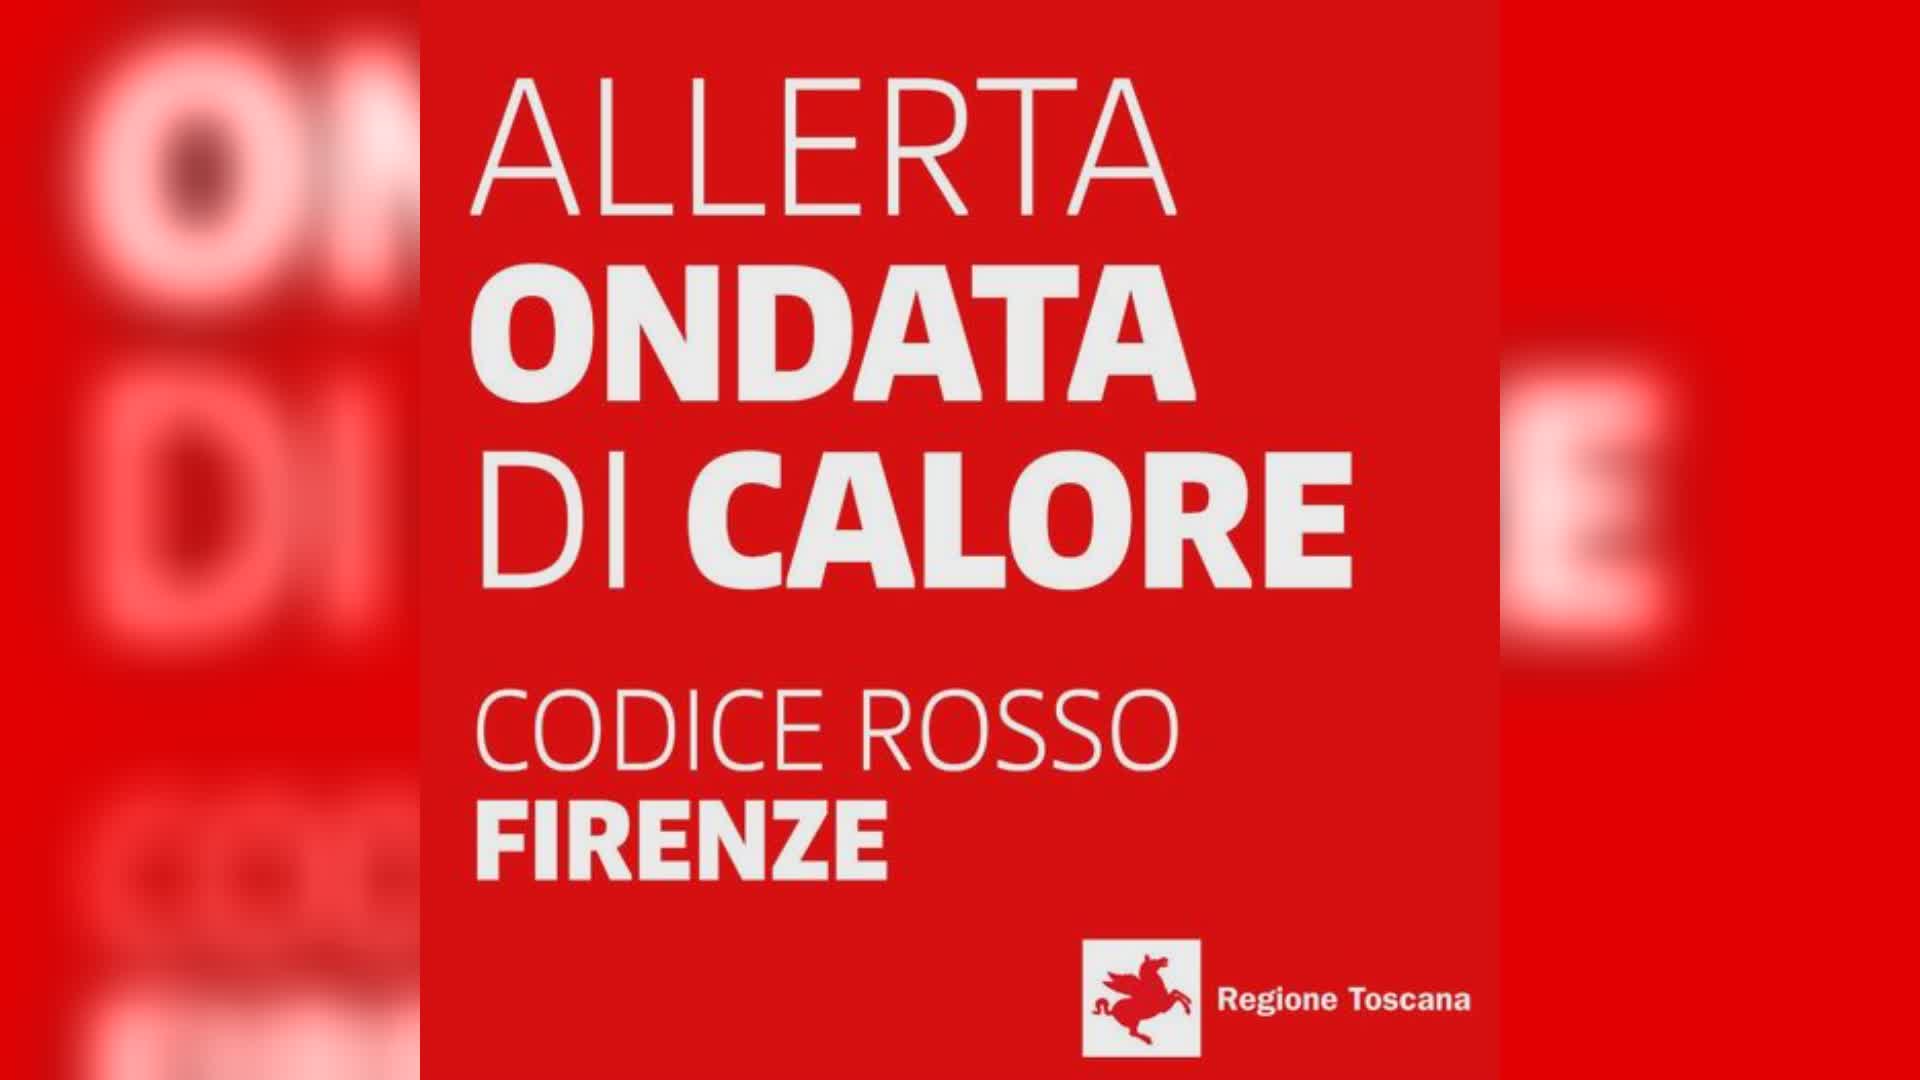 Toscana: Allerta per ondata di calore